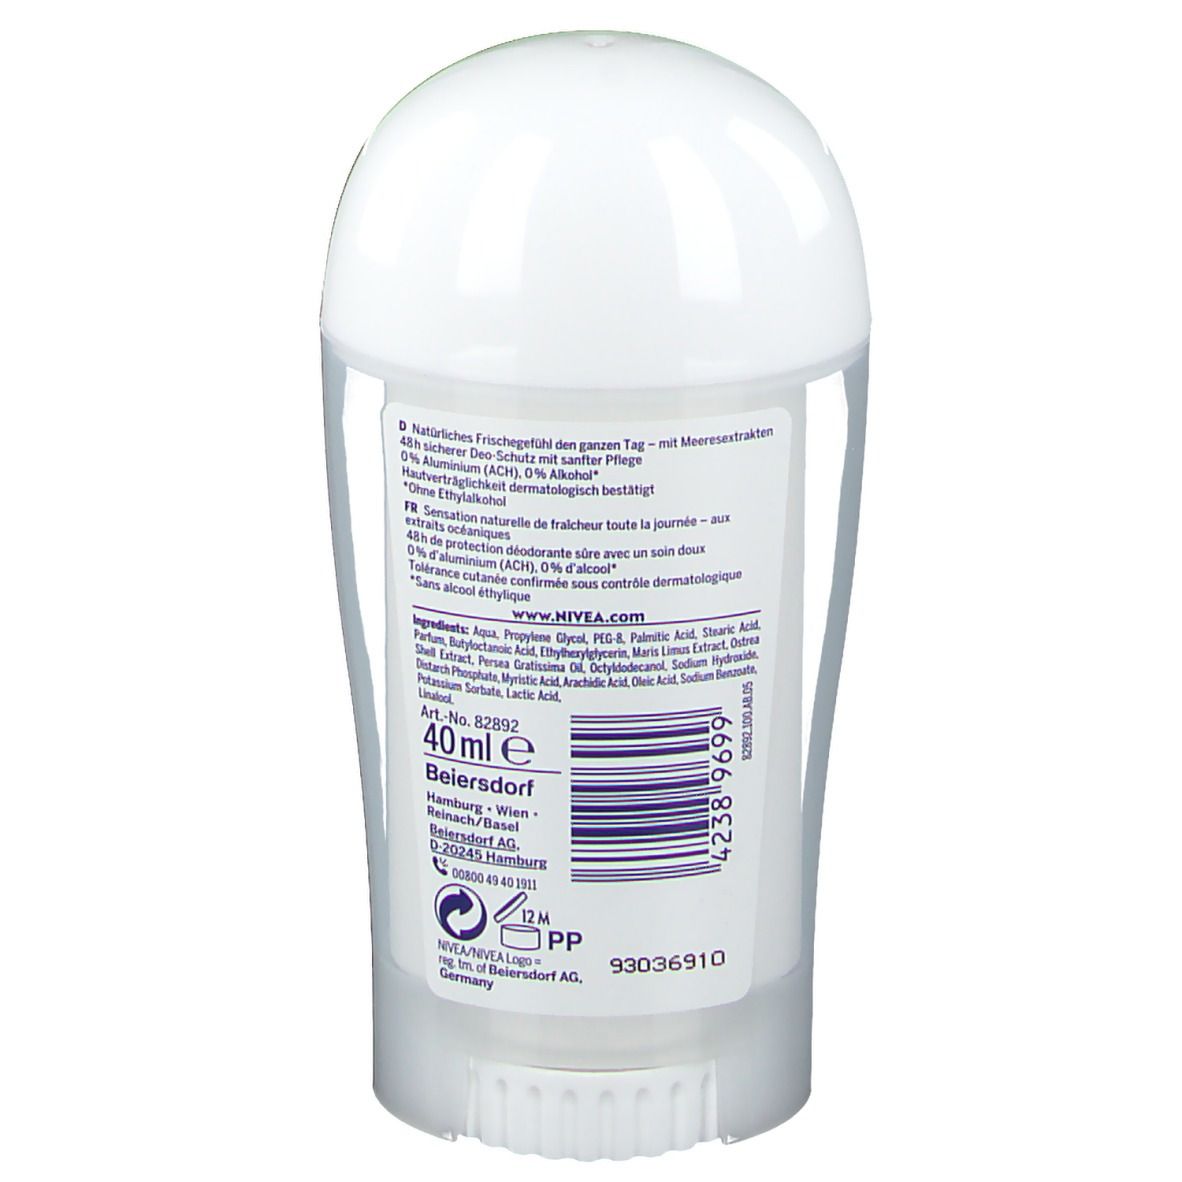 NIVEA® Deodorant fresh natural